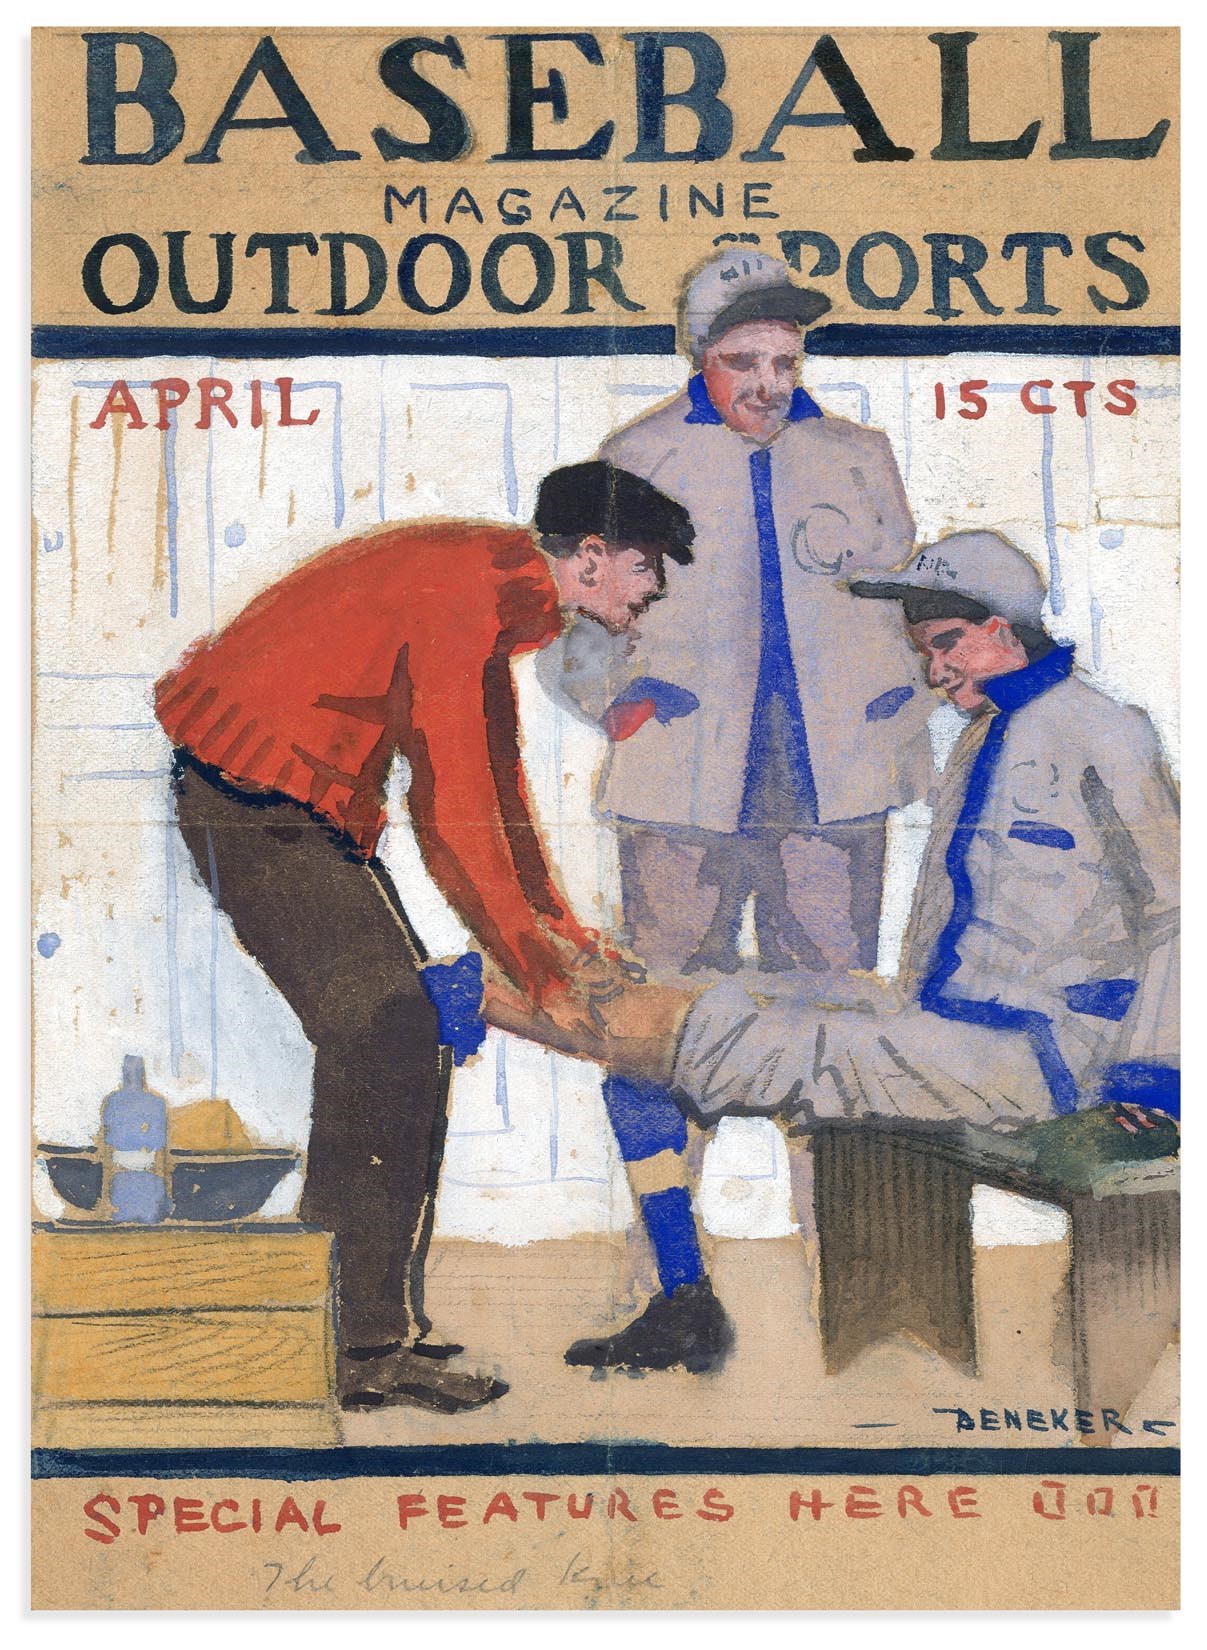 The Baseball Magazine Original Art - 1911 Baseball Magazine "Nap Lajoie" Cover Art Study by Gerrit Beneker (1882-1934)